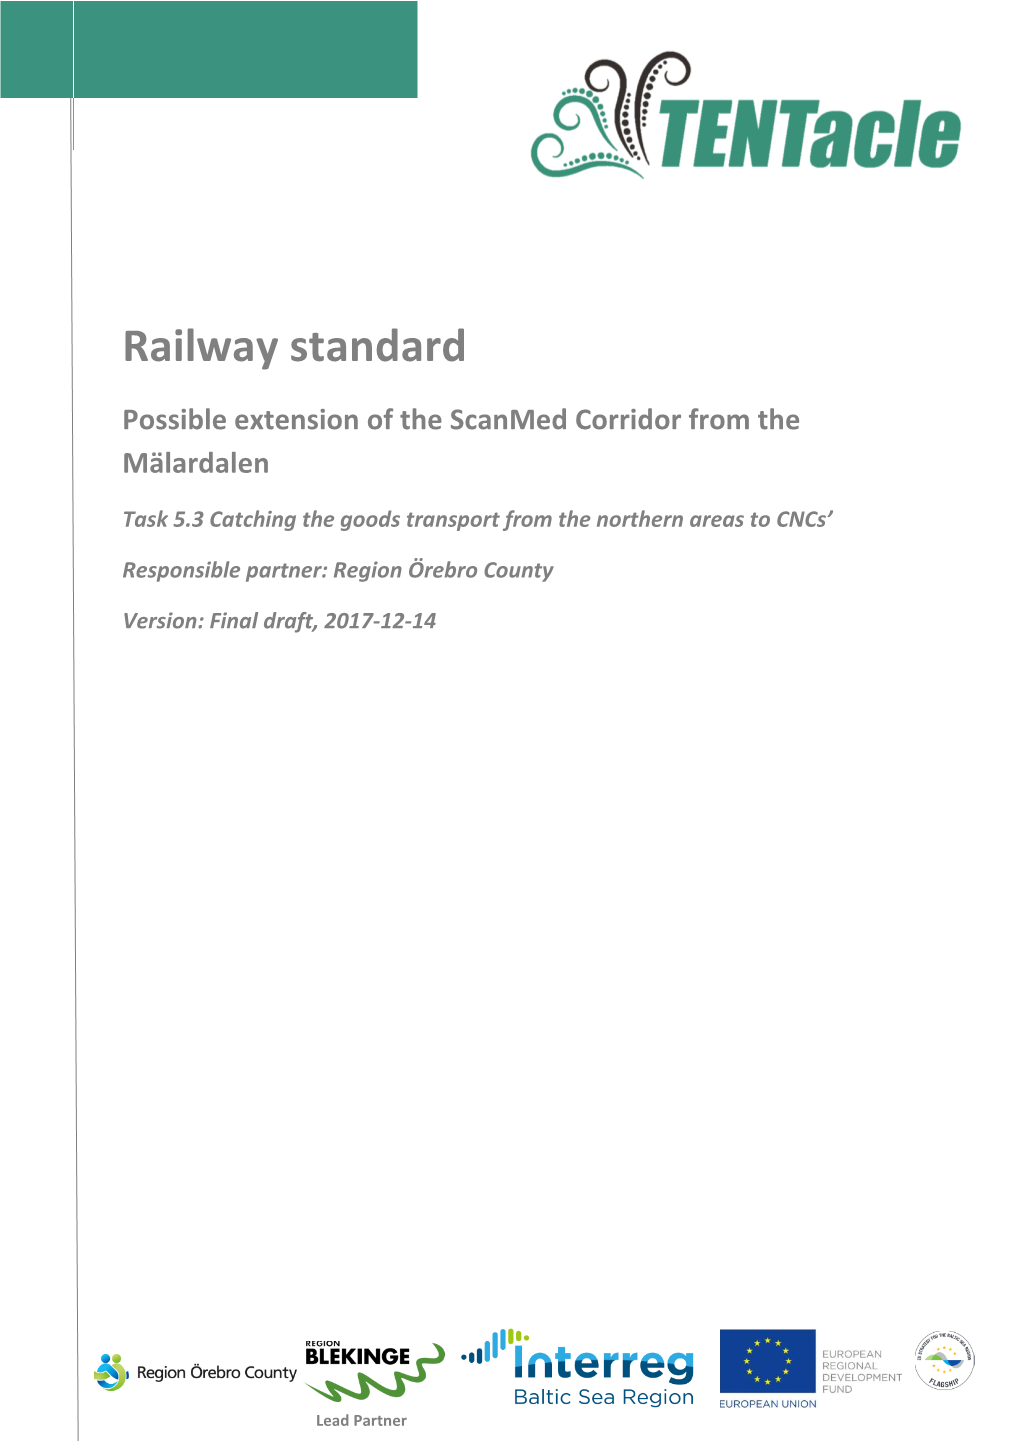 Railway Standard